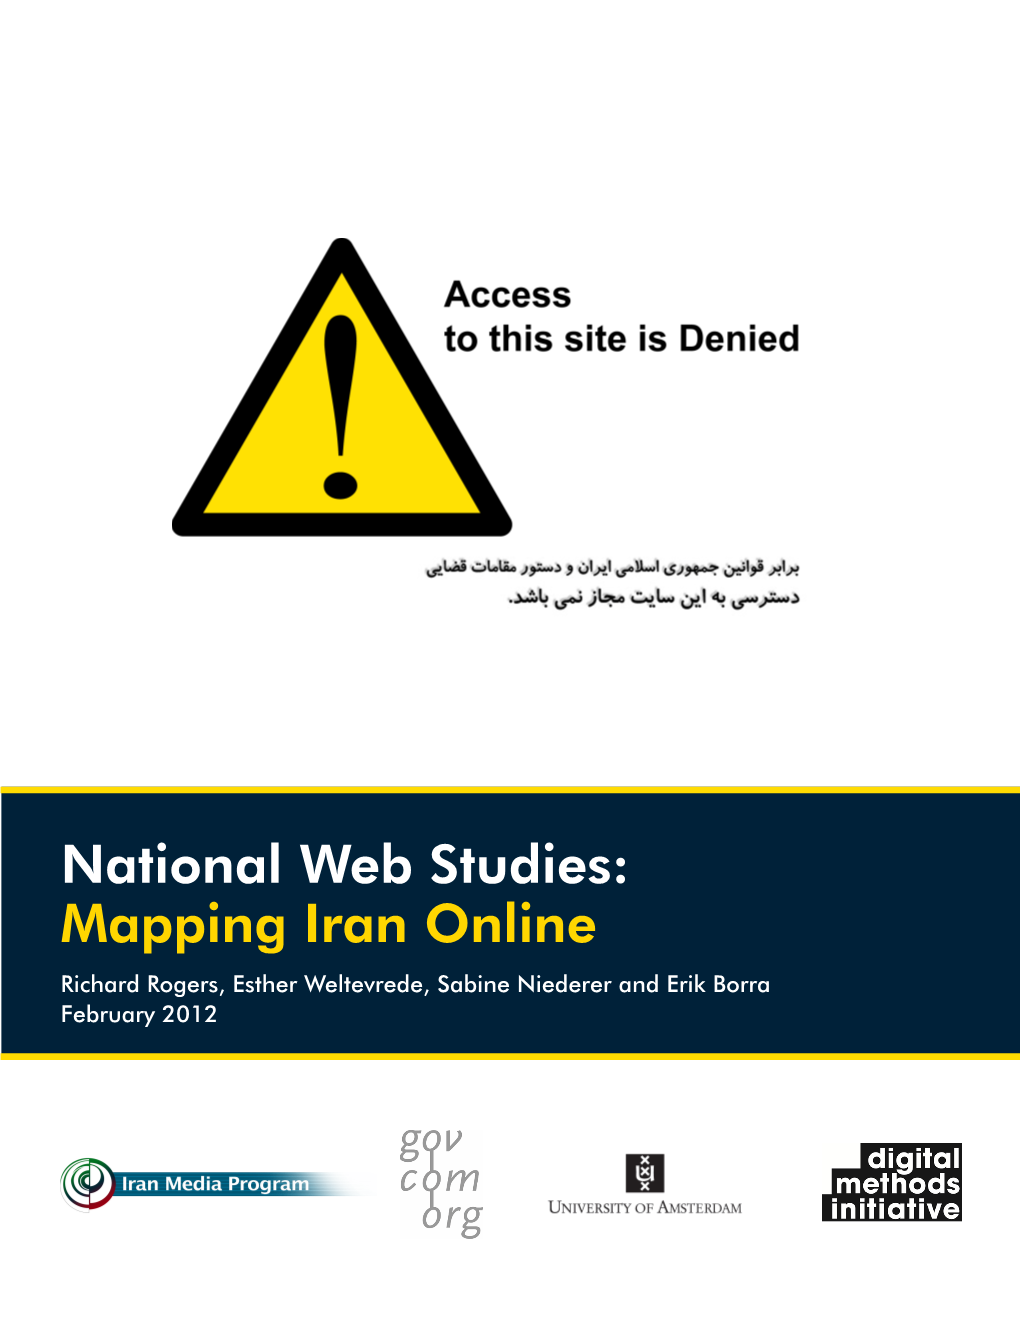 National Web Studies: Mapping Iran Online